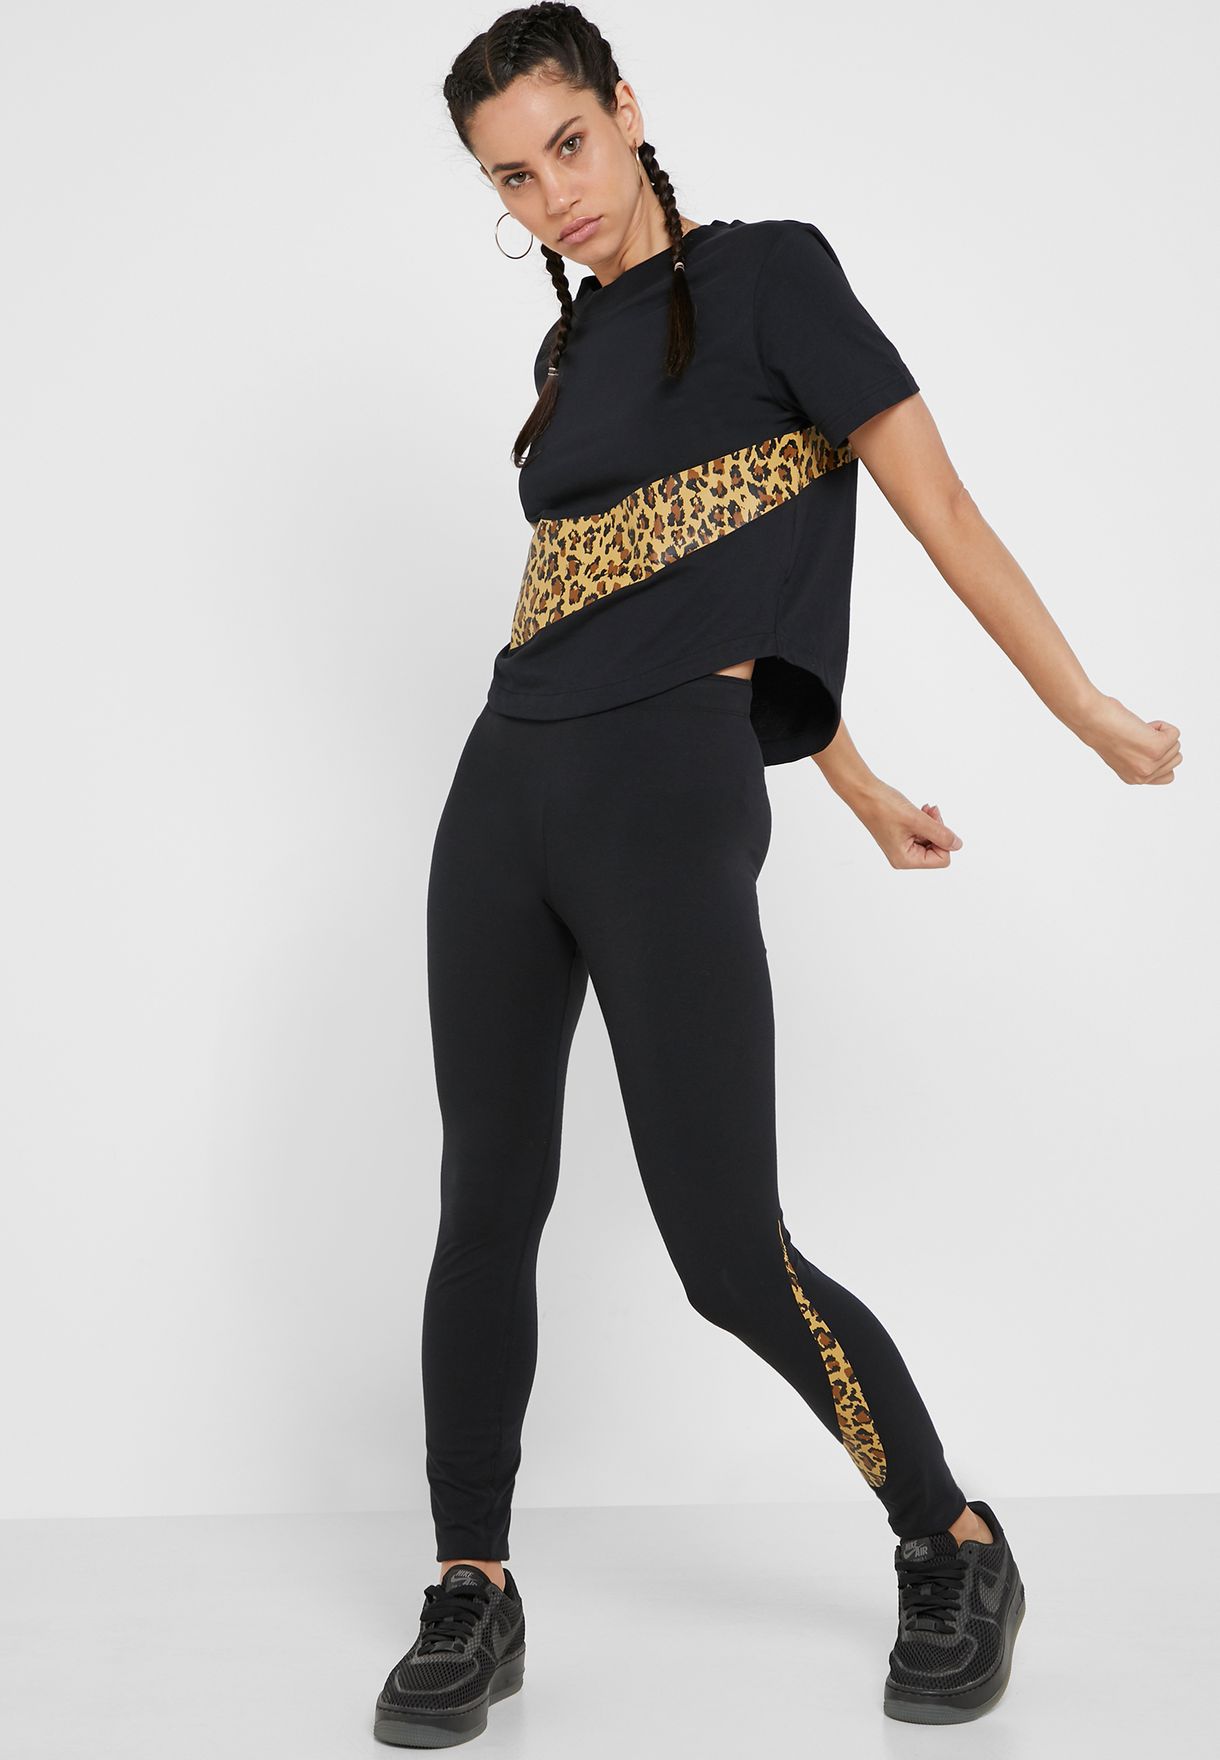 nike black leggings with leopard swoosh